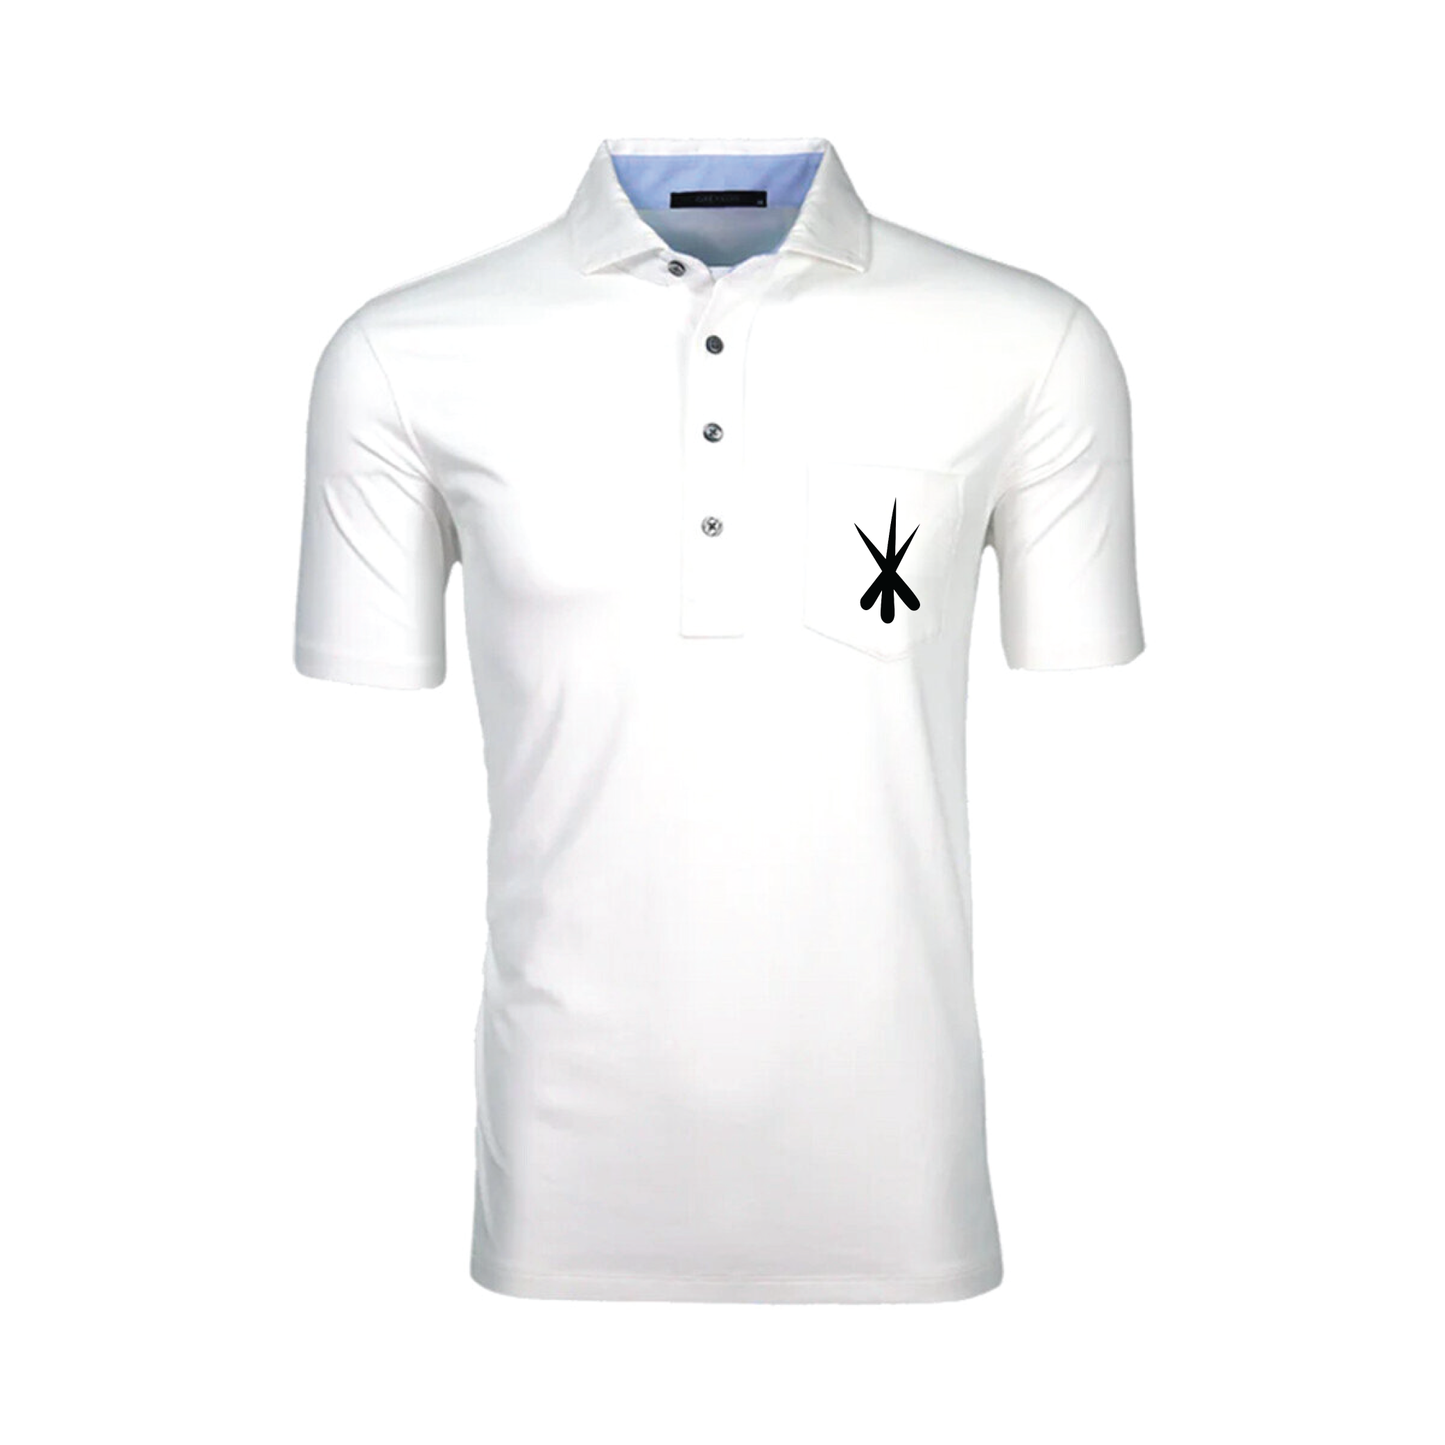 Jimmy Divots -- Premium Star Polo Shirt